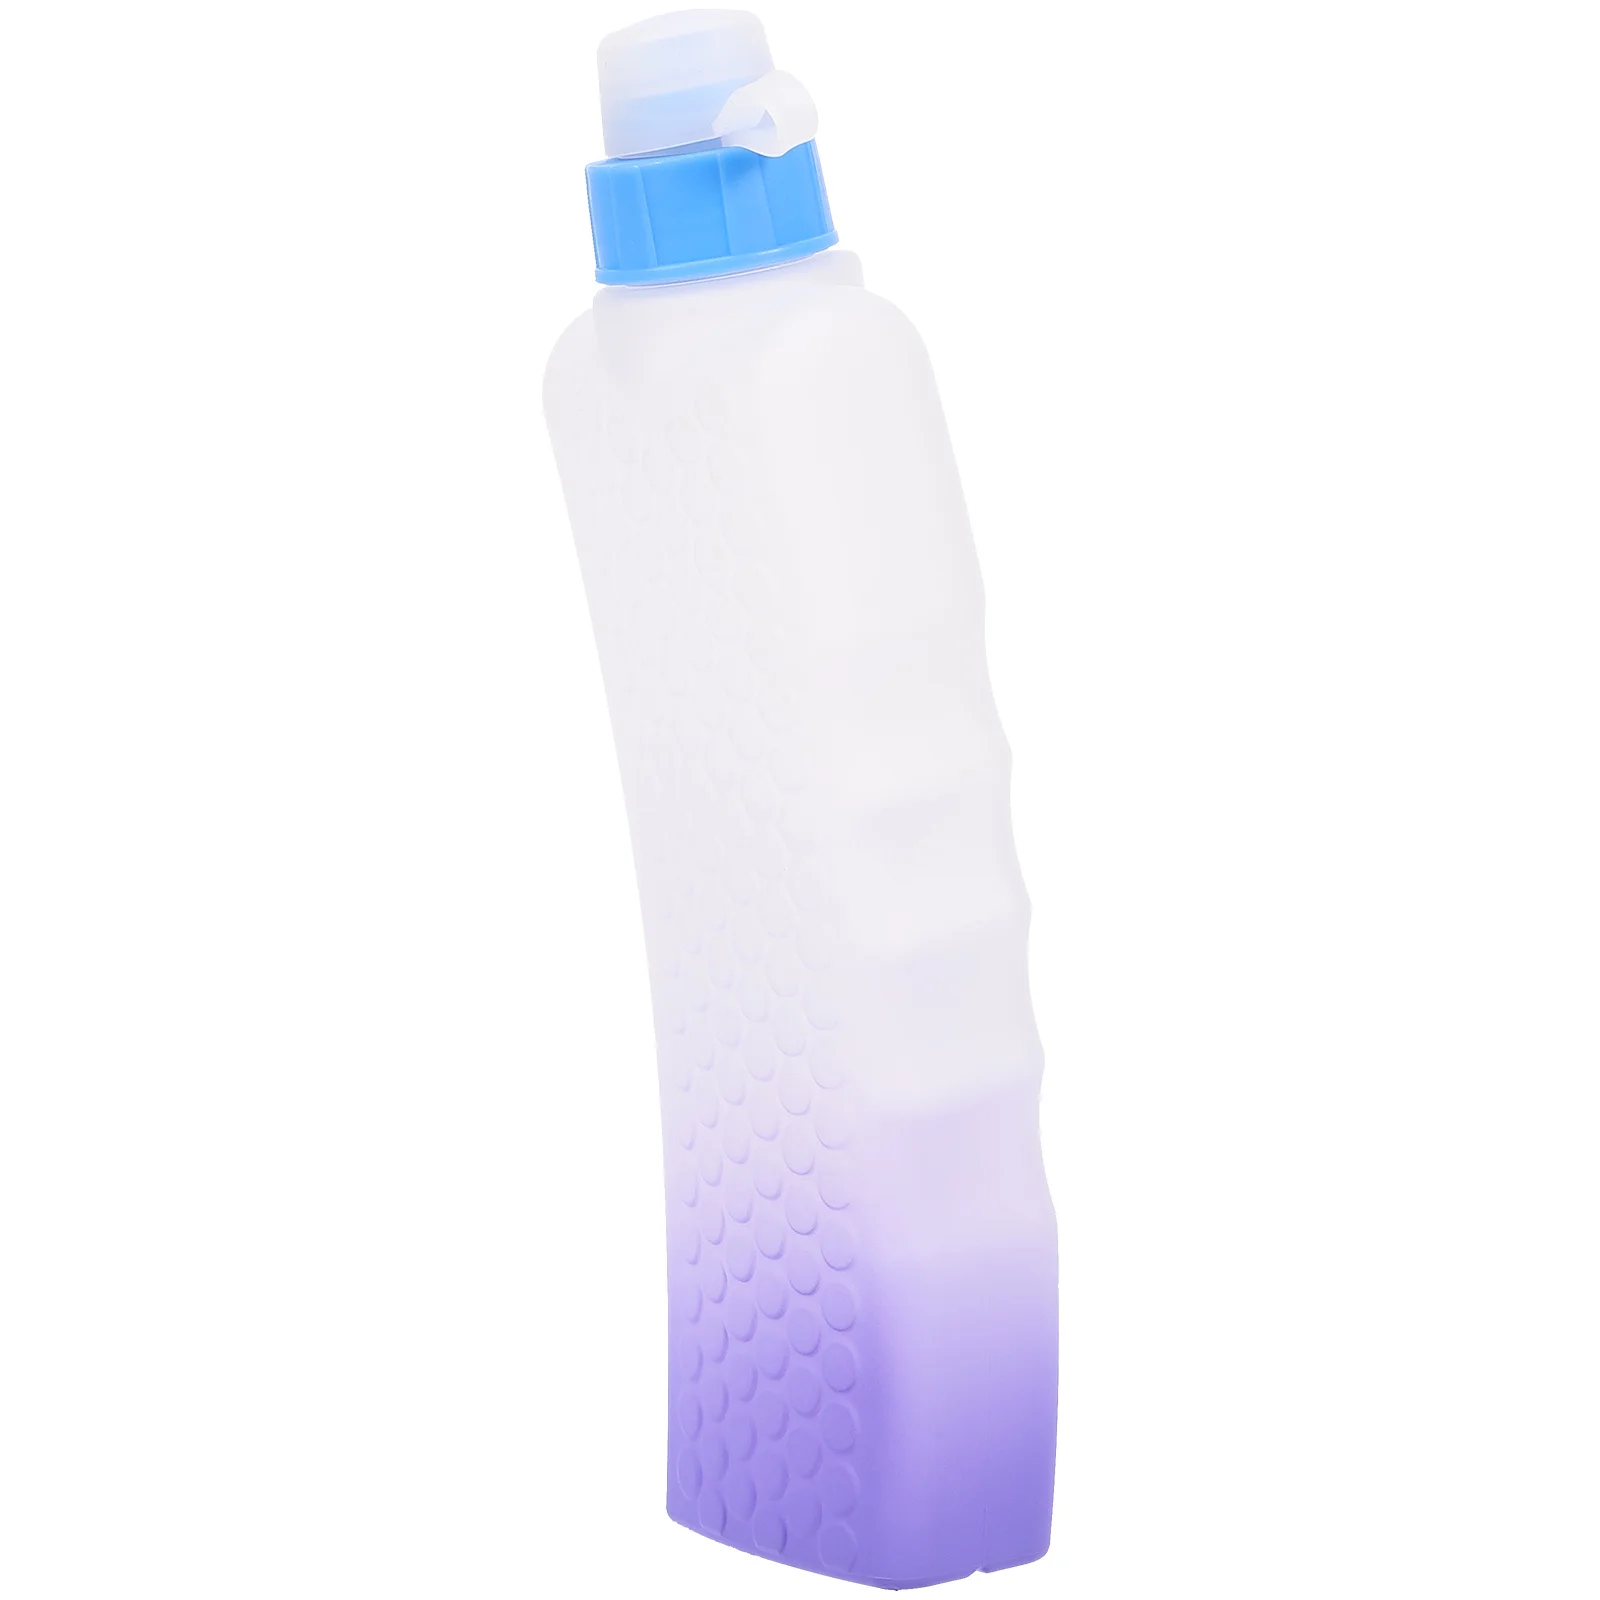 Portable Water Bottle Daily Use Drink Bottle Multi-function Sports Bottle Drink Accessory